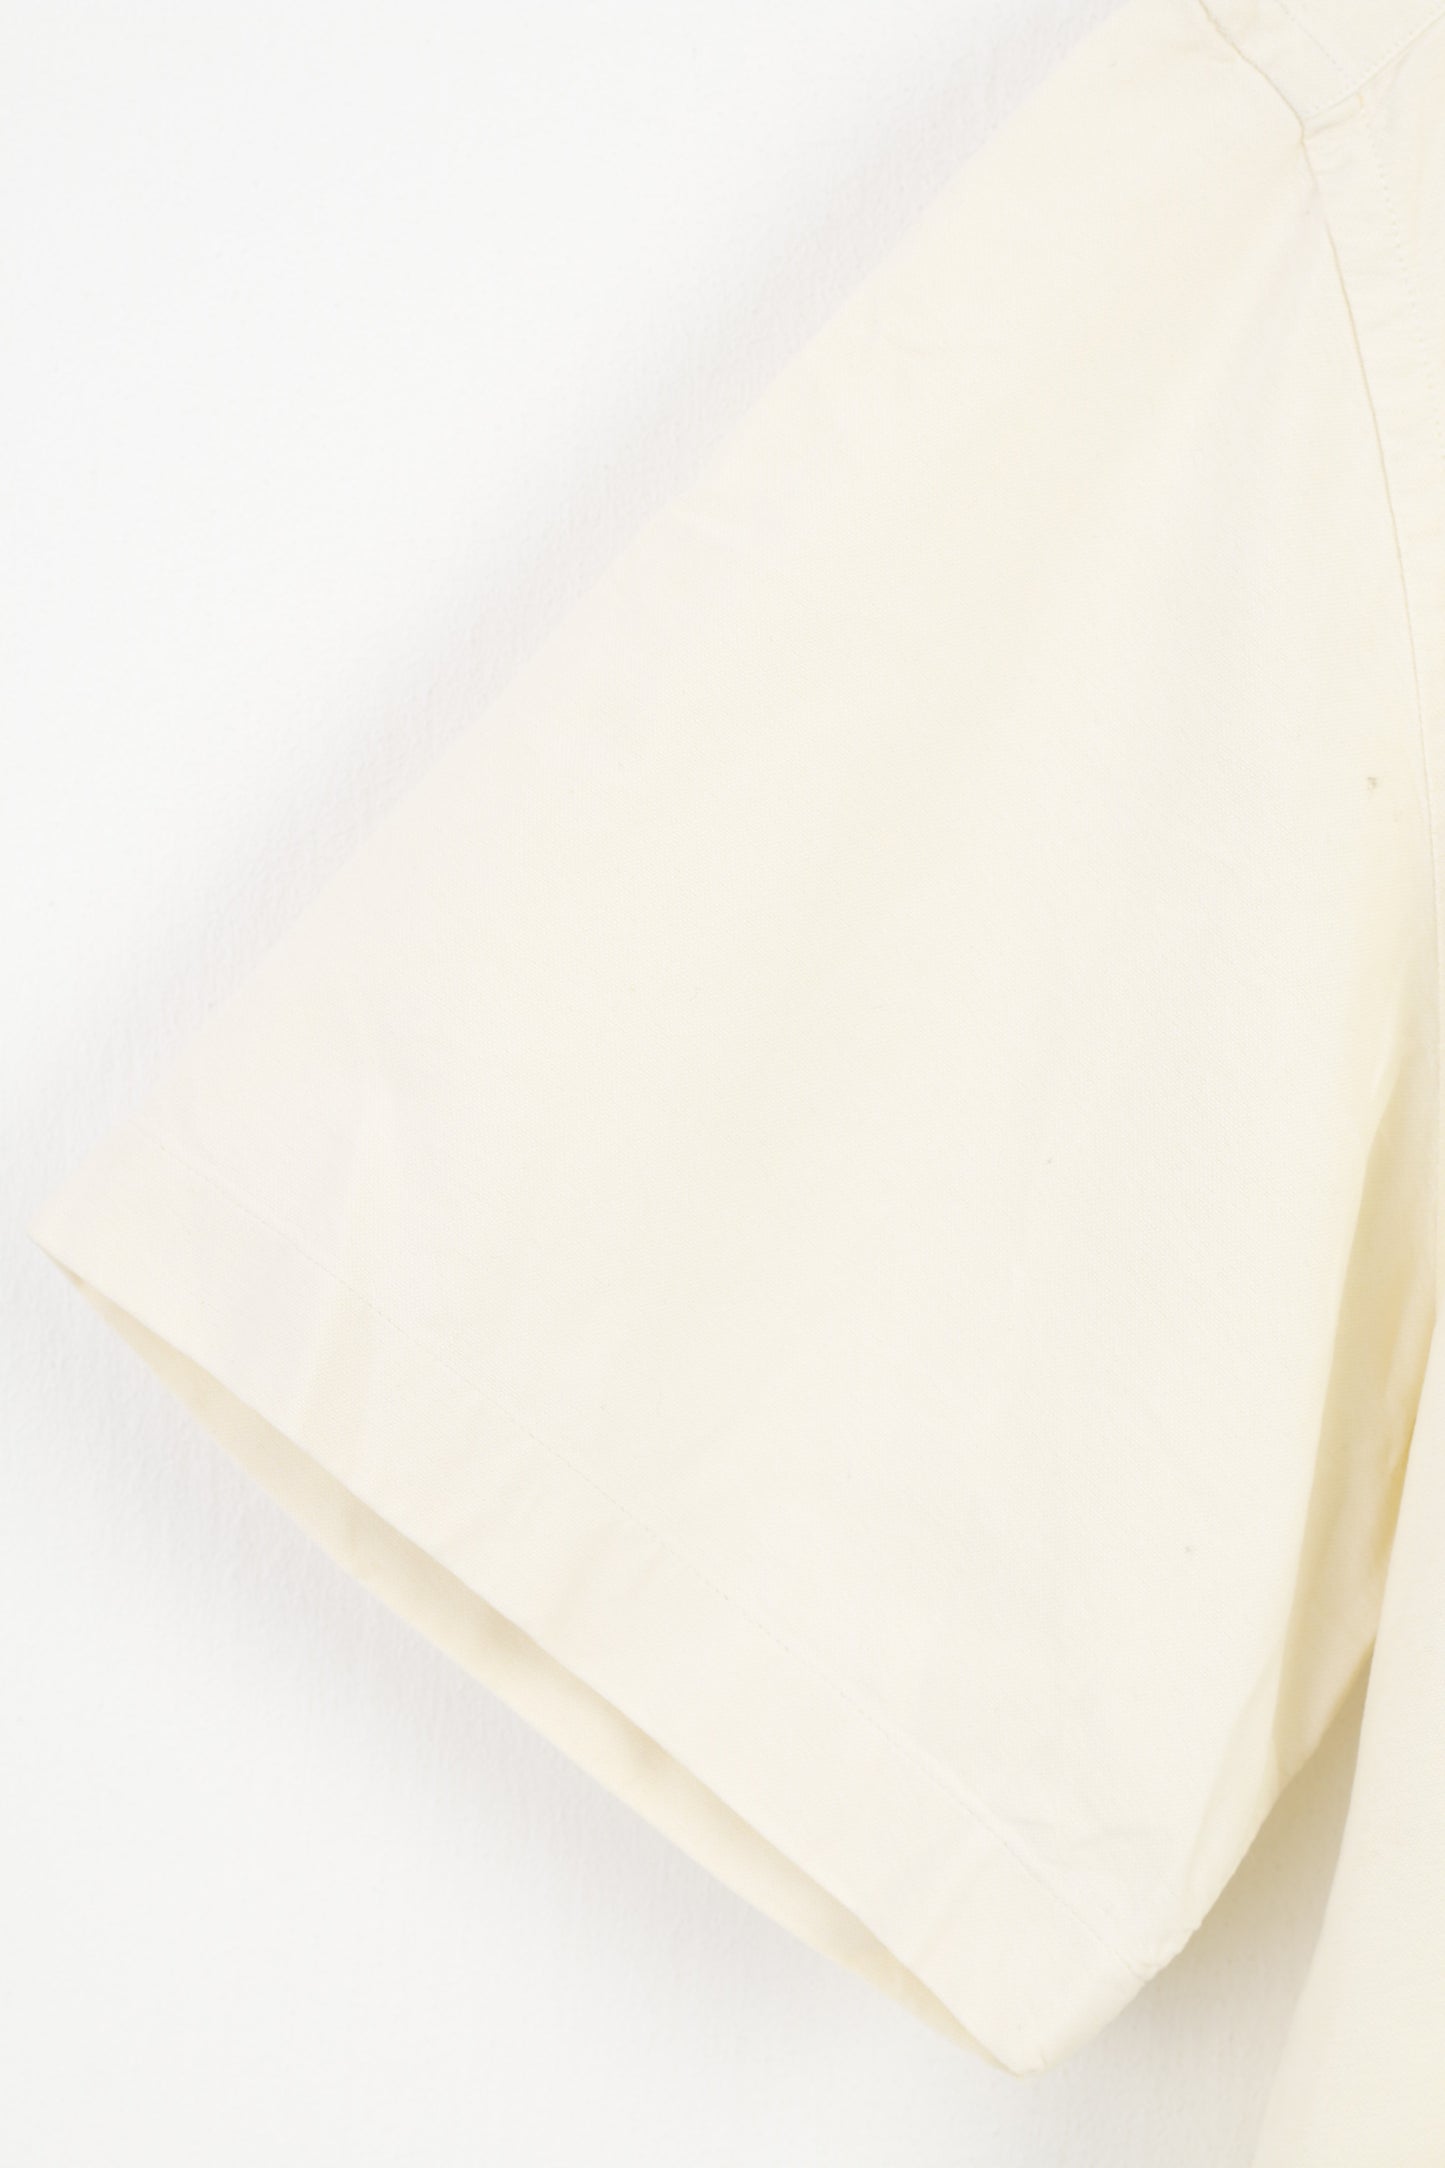 Tommy Hilfiger Men XL Casual Shirt Yellow Short Sleeve Classic Cotton Top